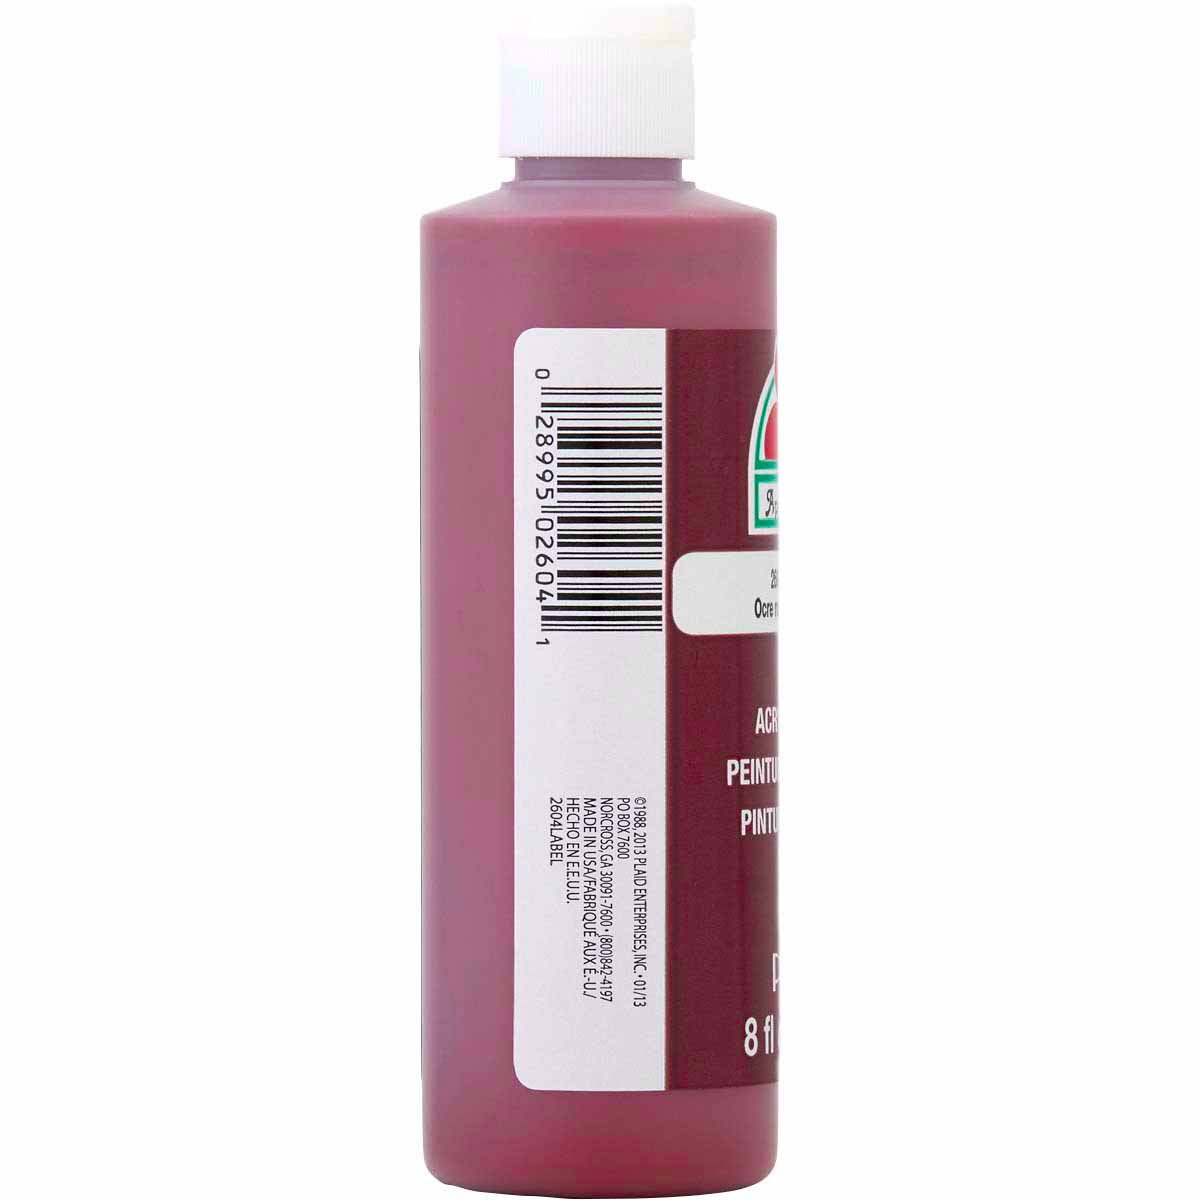 Apple Barrel ® Colors - Barn Red, 8 oz. - K2604